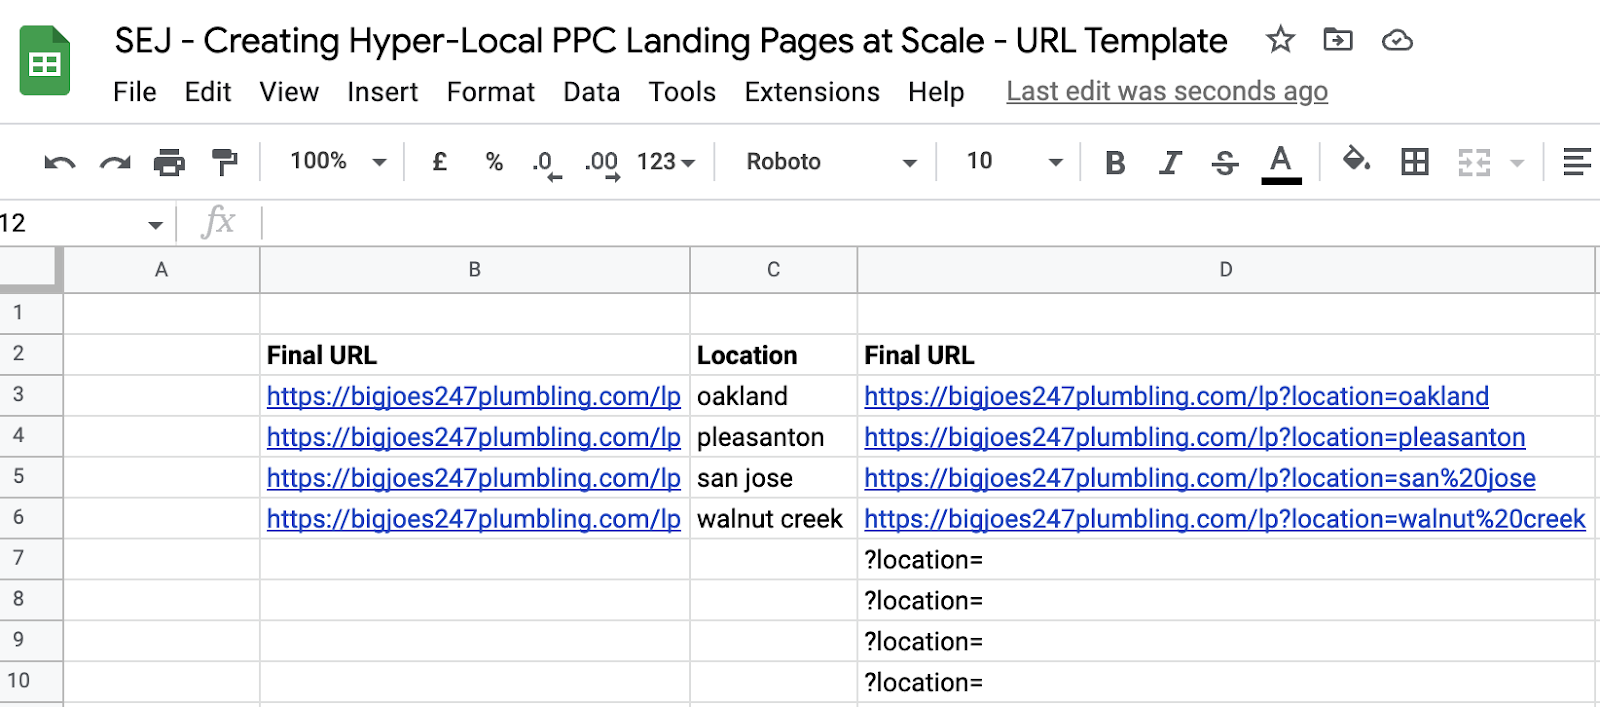 Landing page URLs